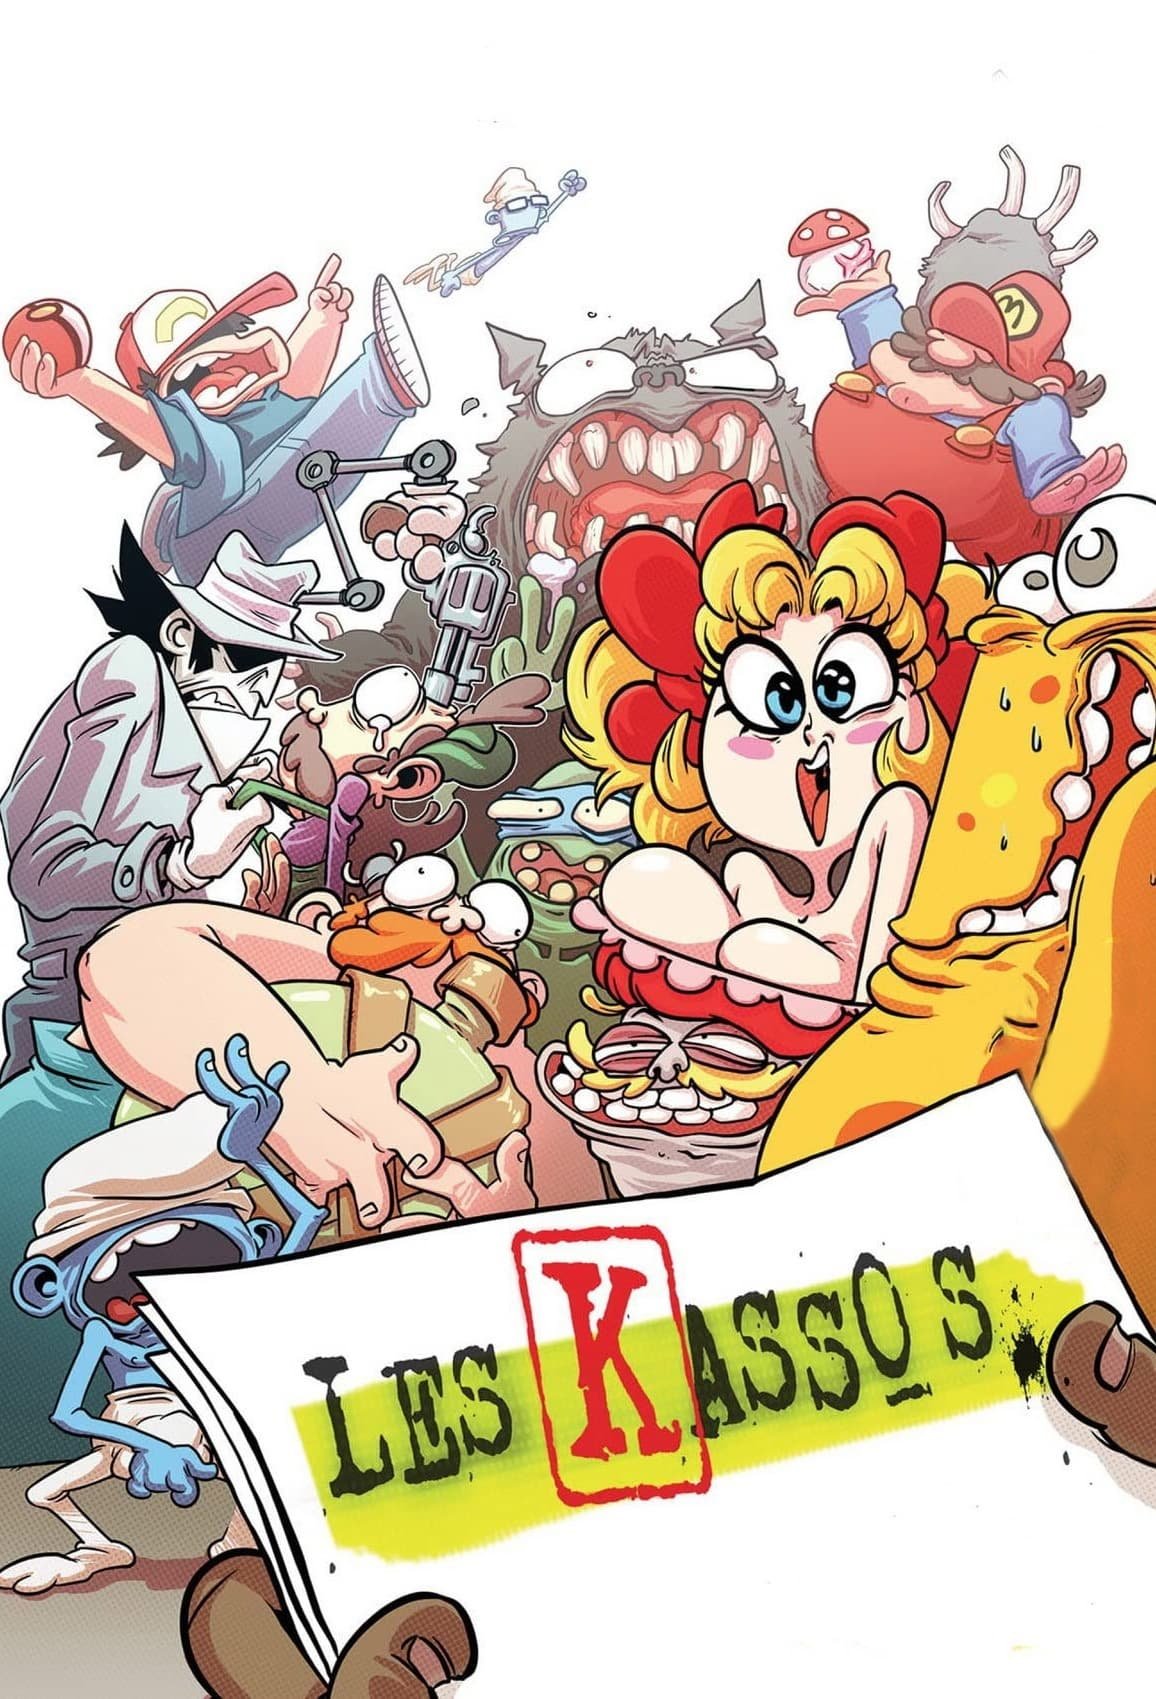 Les Kassos - Saison 4